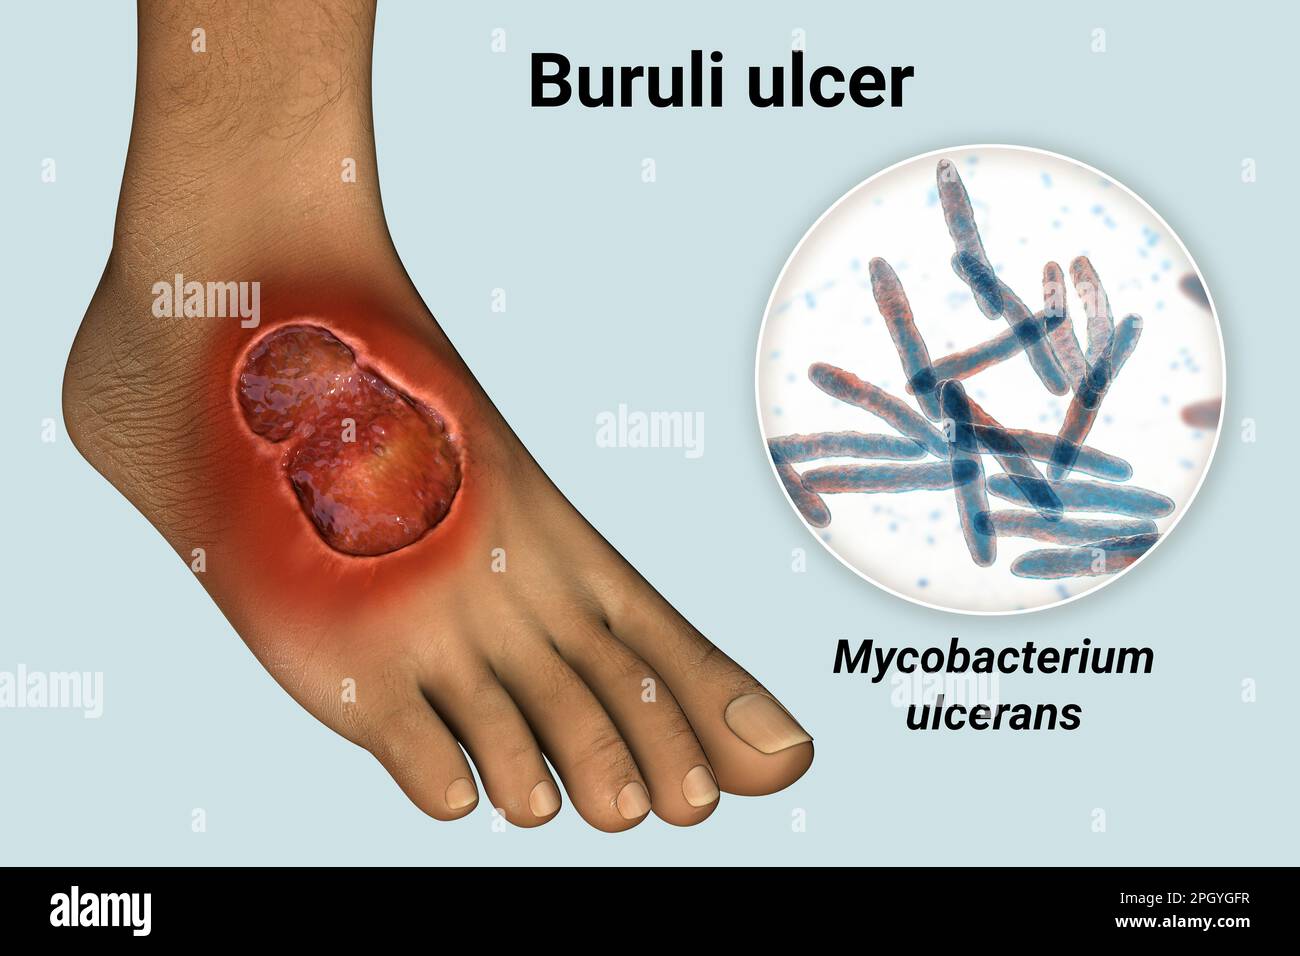 Buruli ulcer and Mycobacterium ulcerans, illustration Stock Photo